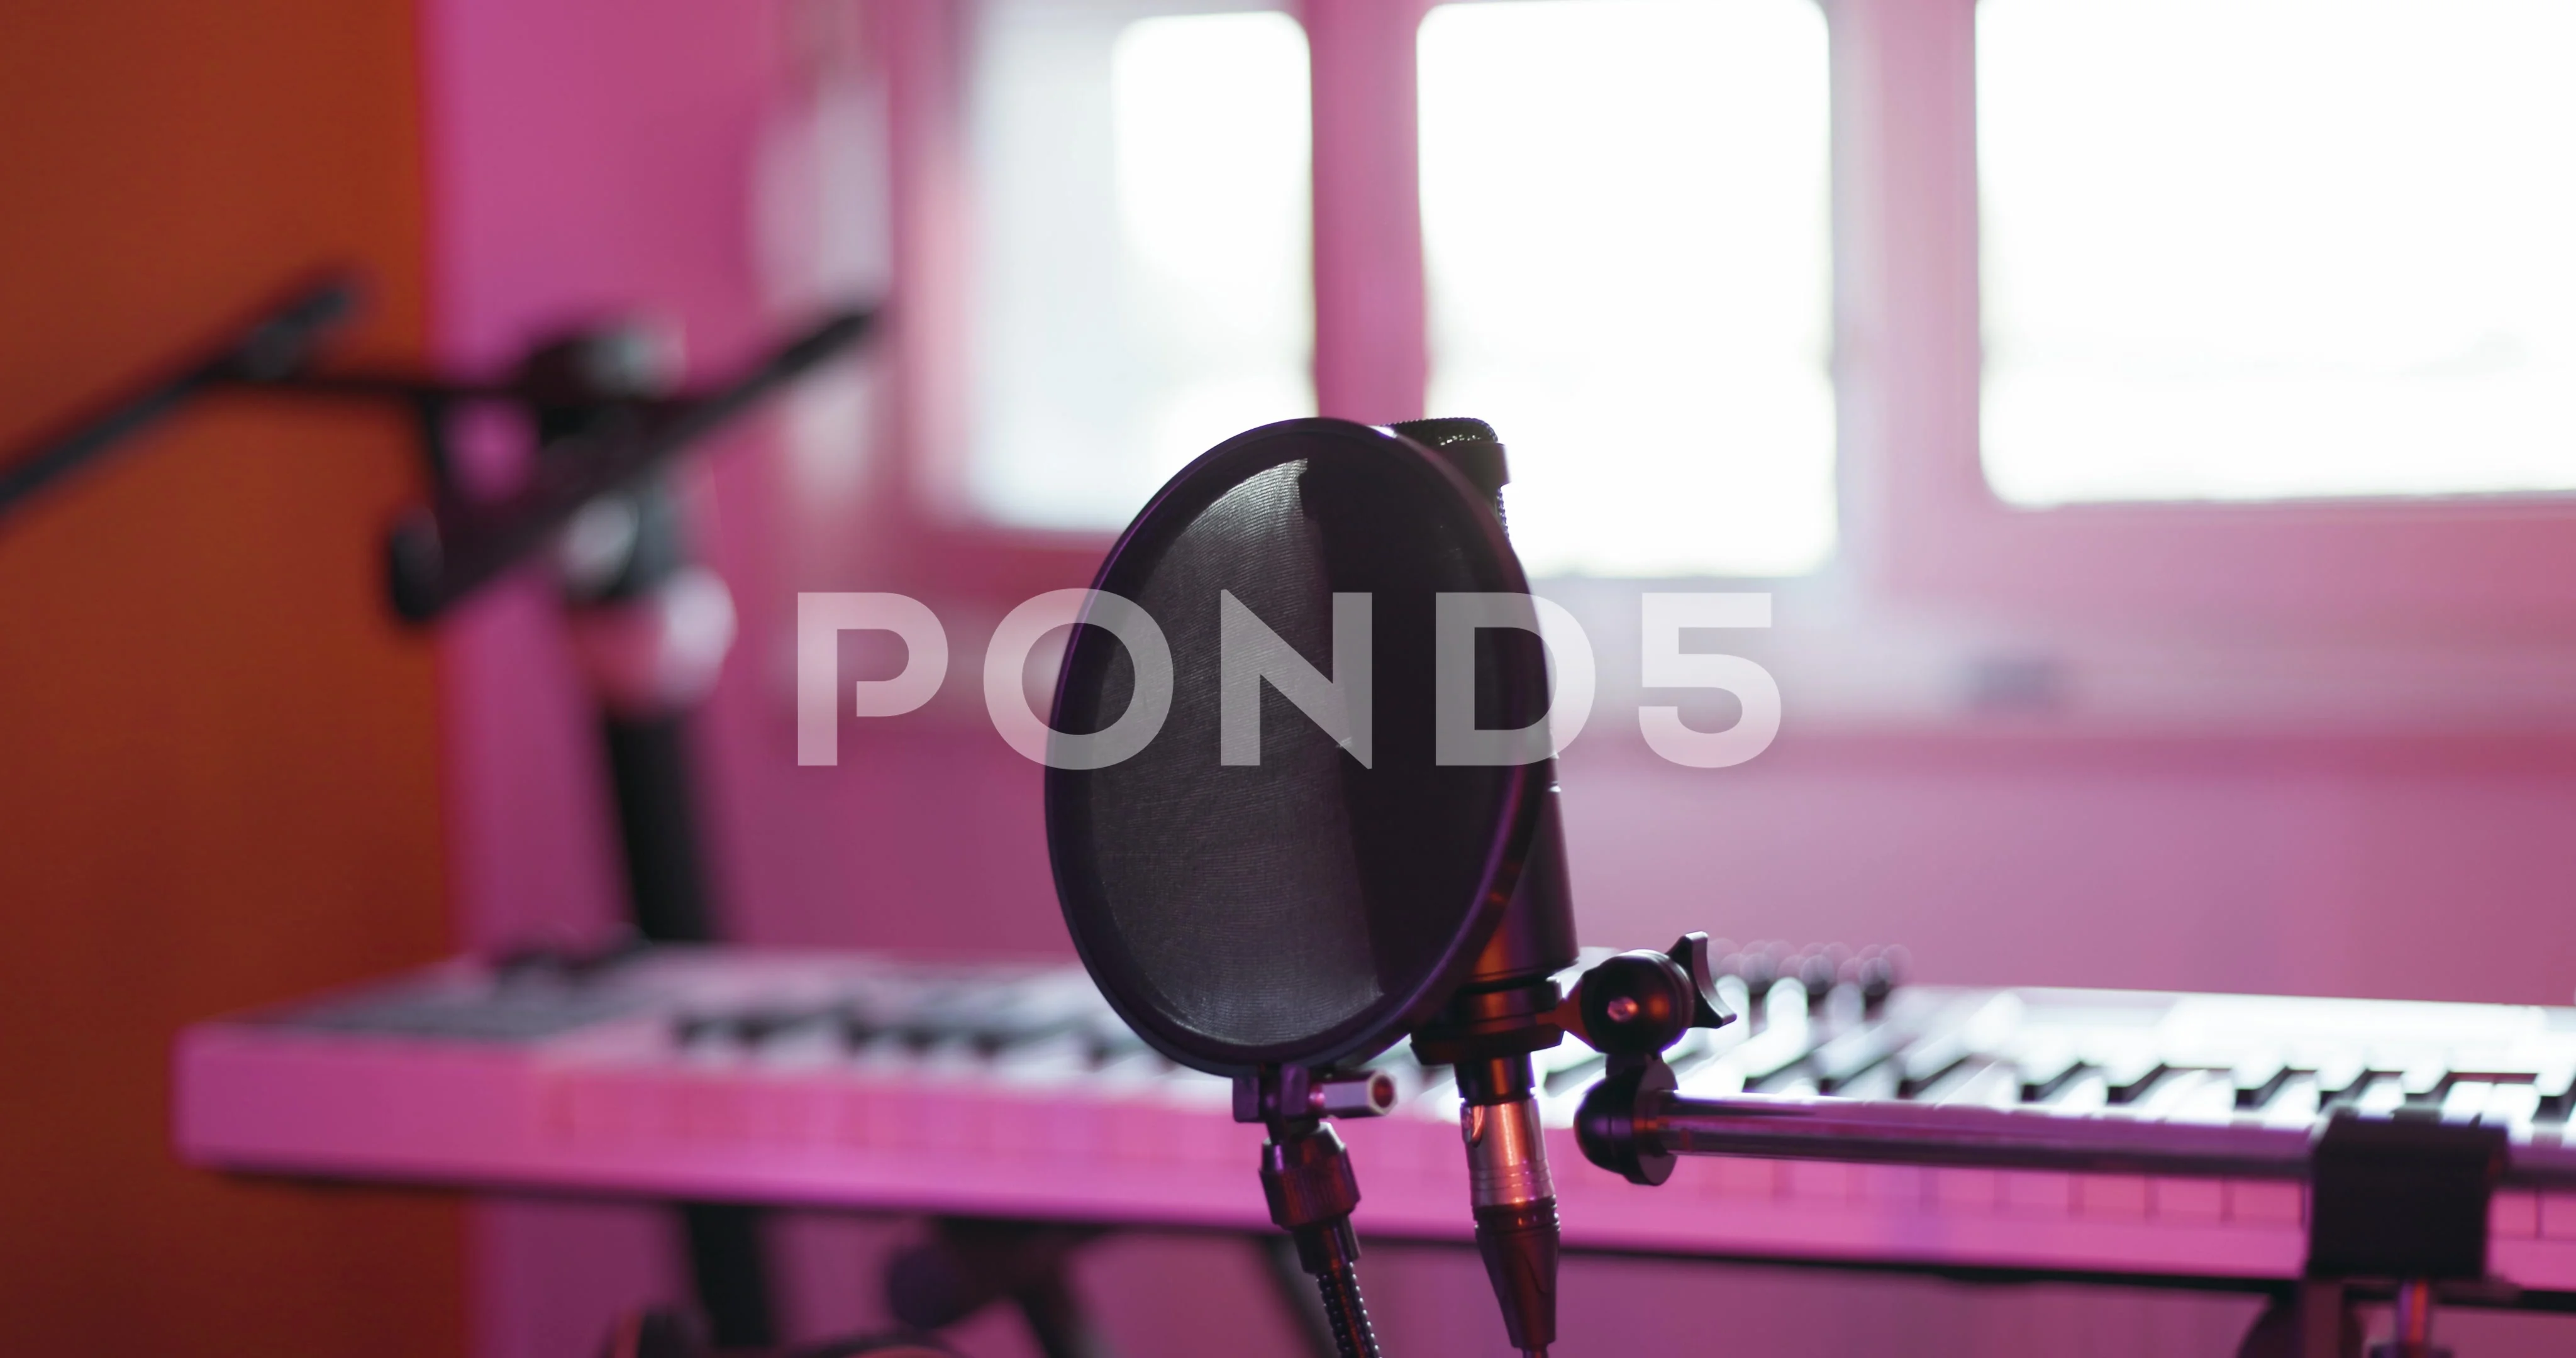 mic recording studio wallpaper